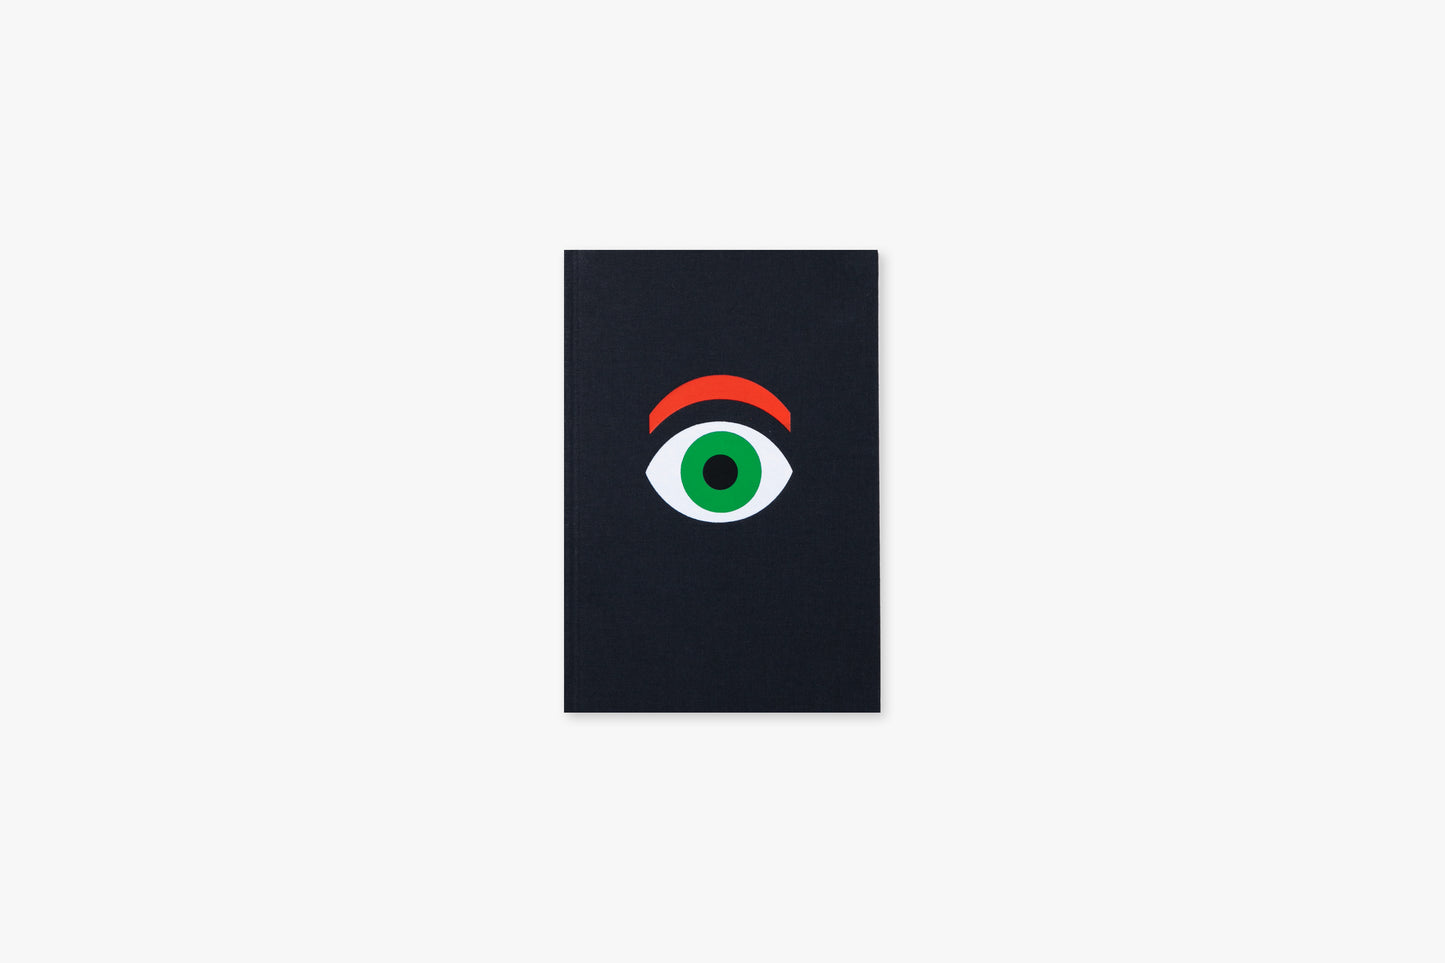 A Designer’s Eye